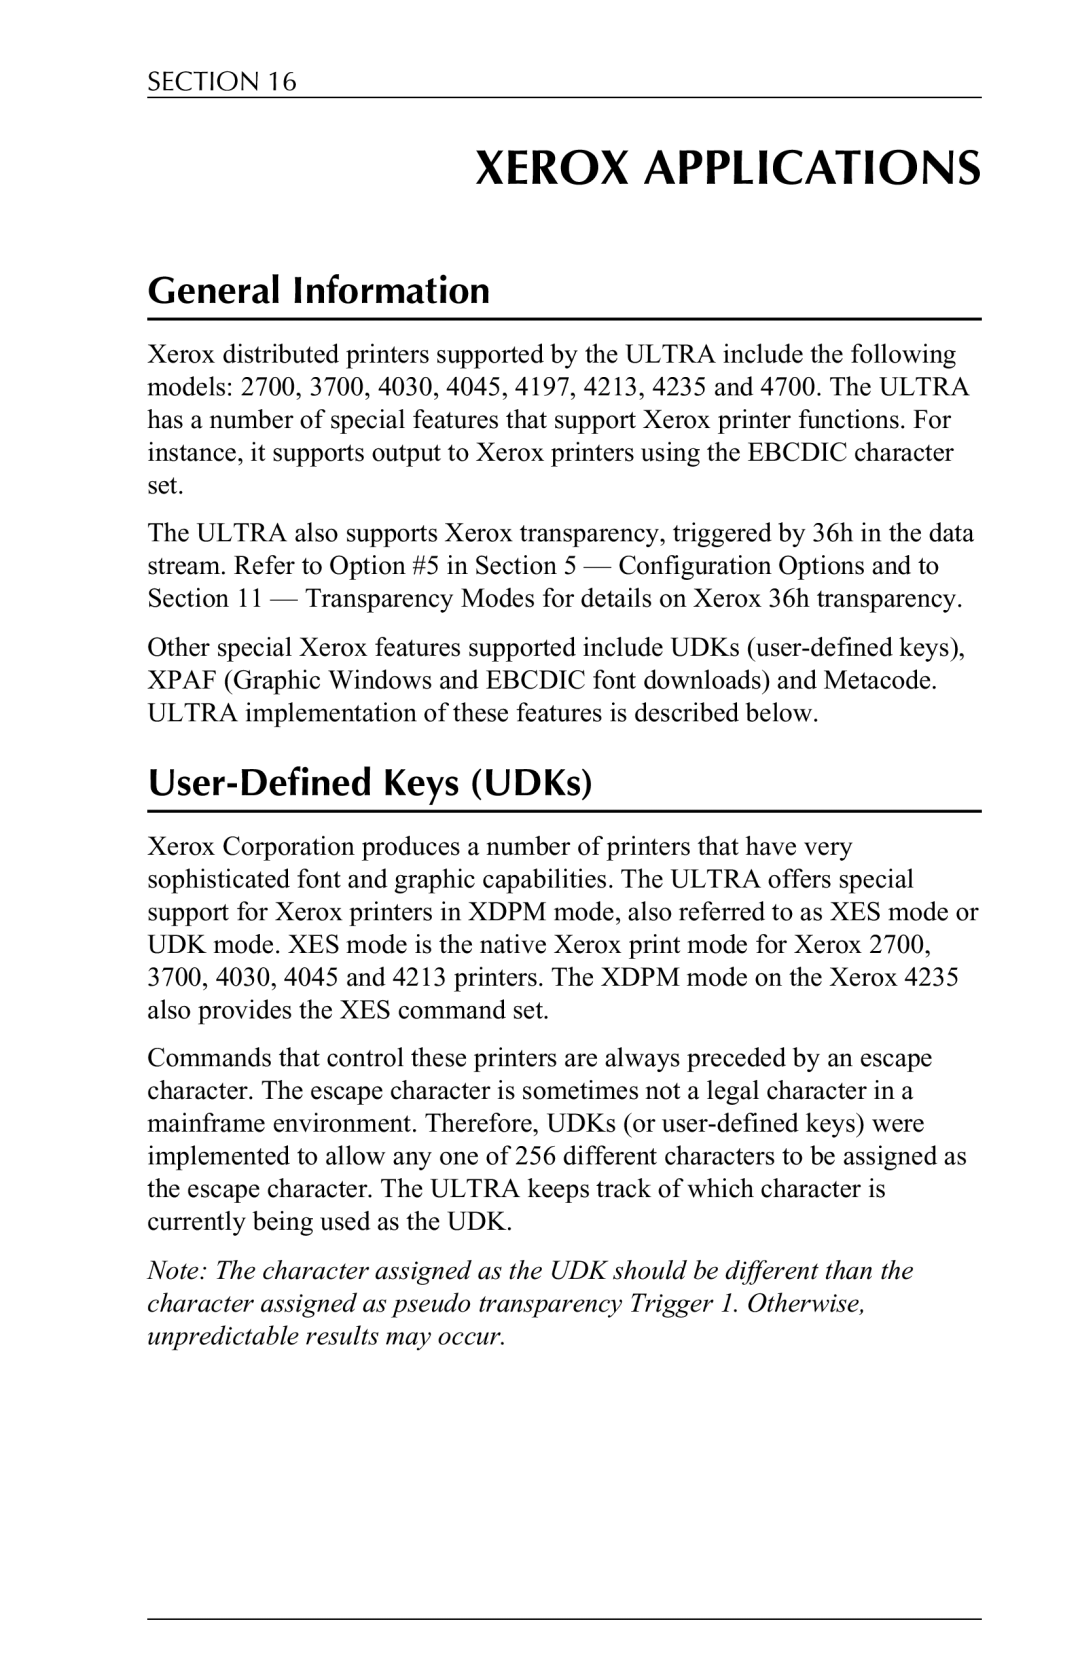 Agilent Technologies 6287 manual Xerox Applications, User-Defined Keys UDKs 